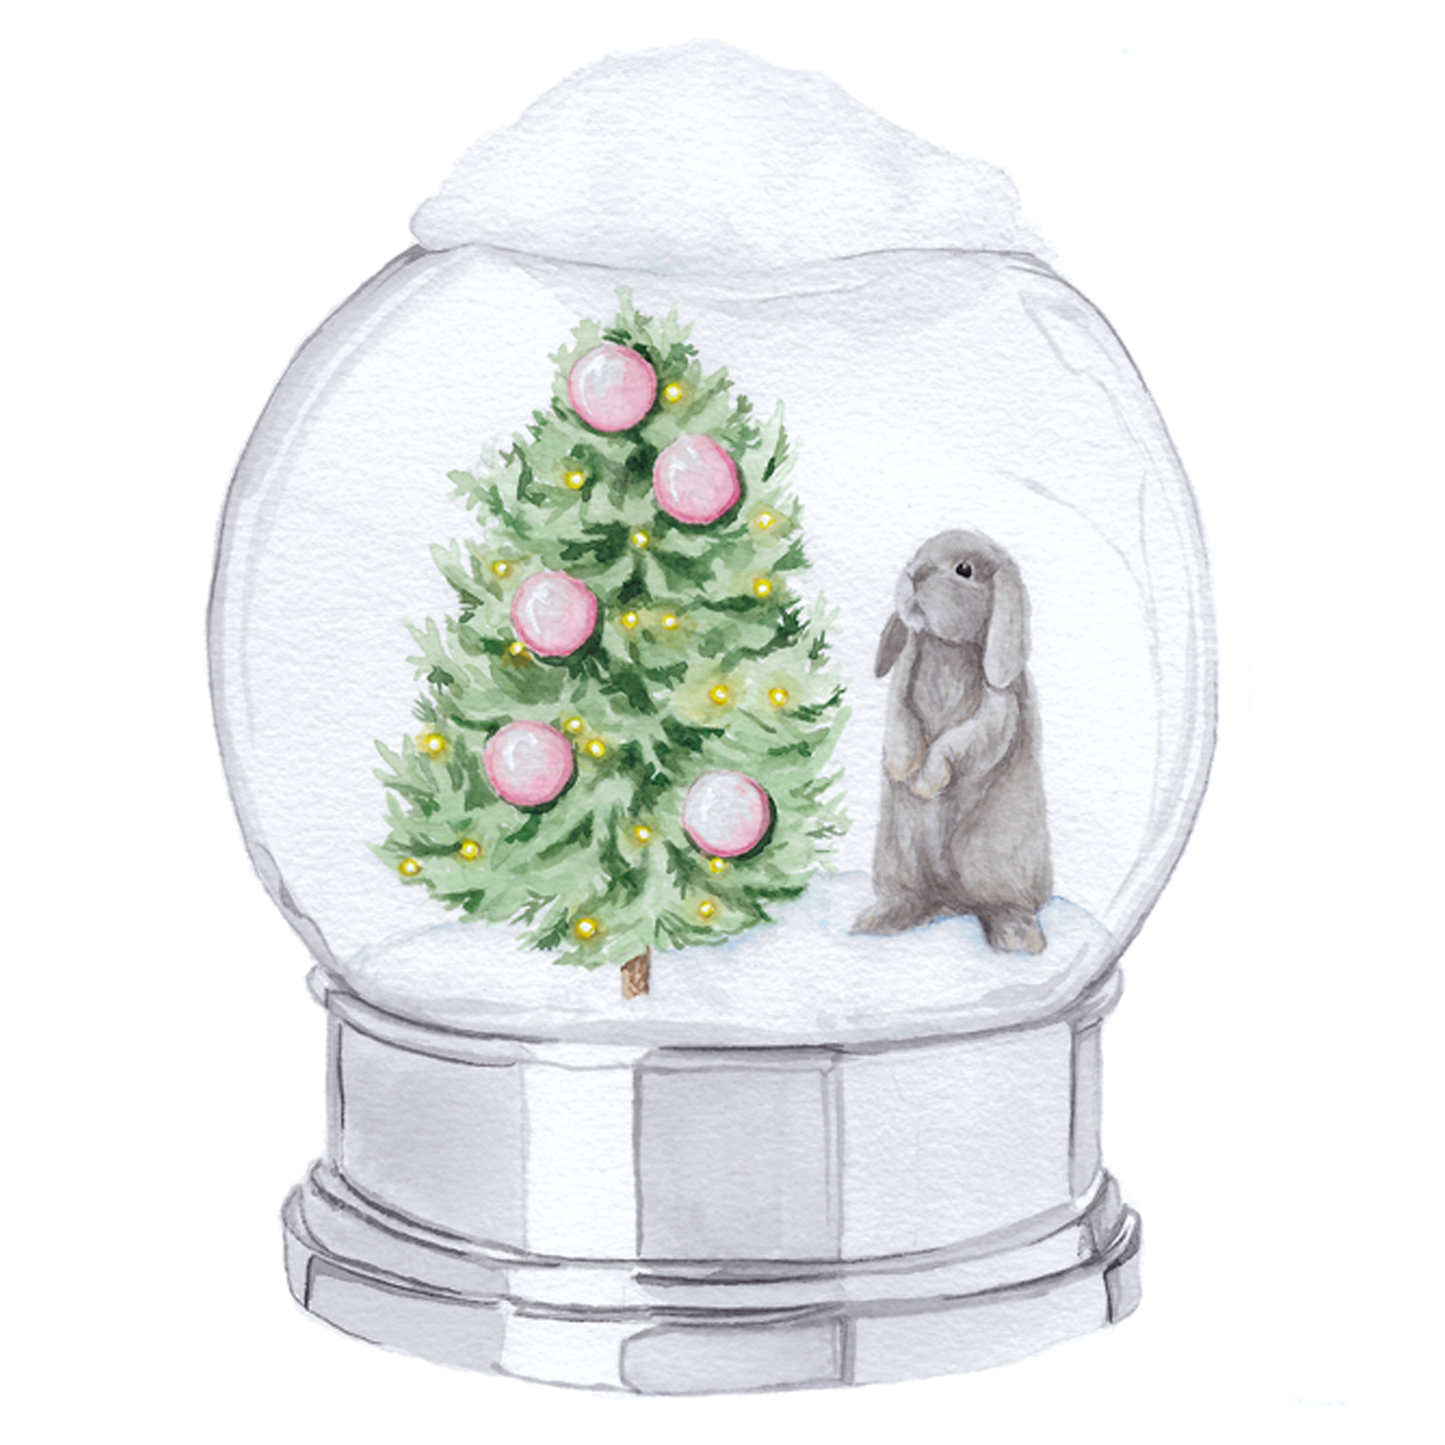 Snow Globe & Bunny Art Print - Arthur